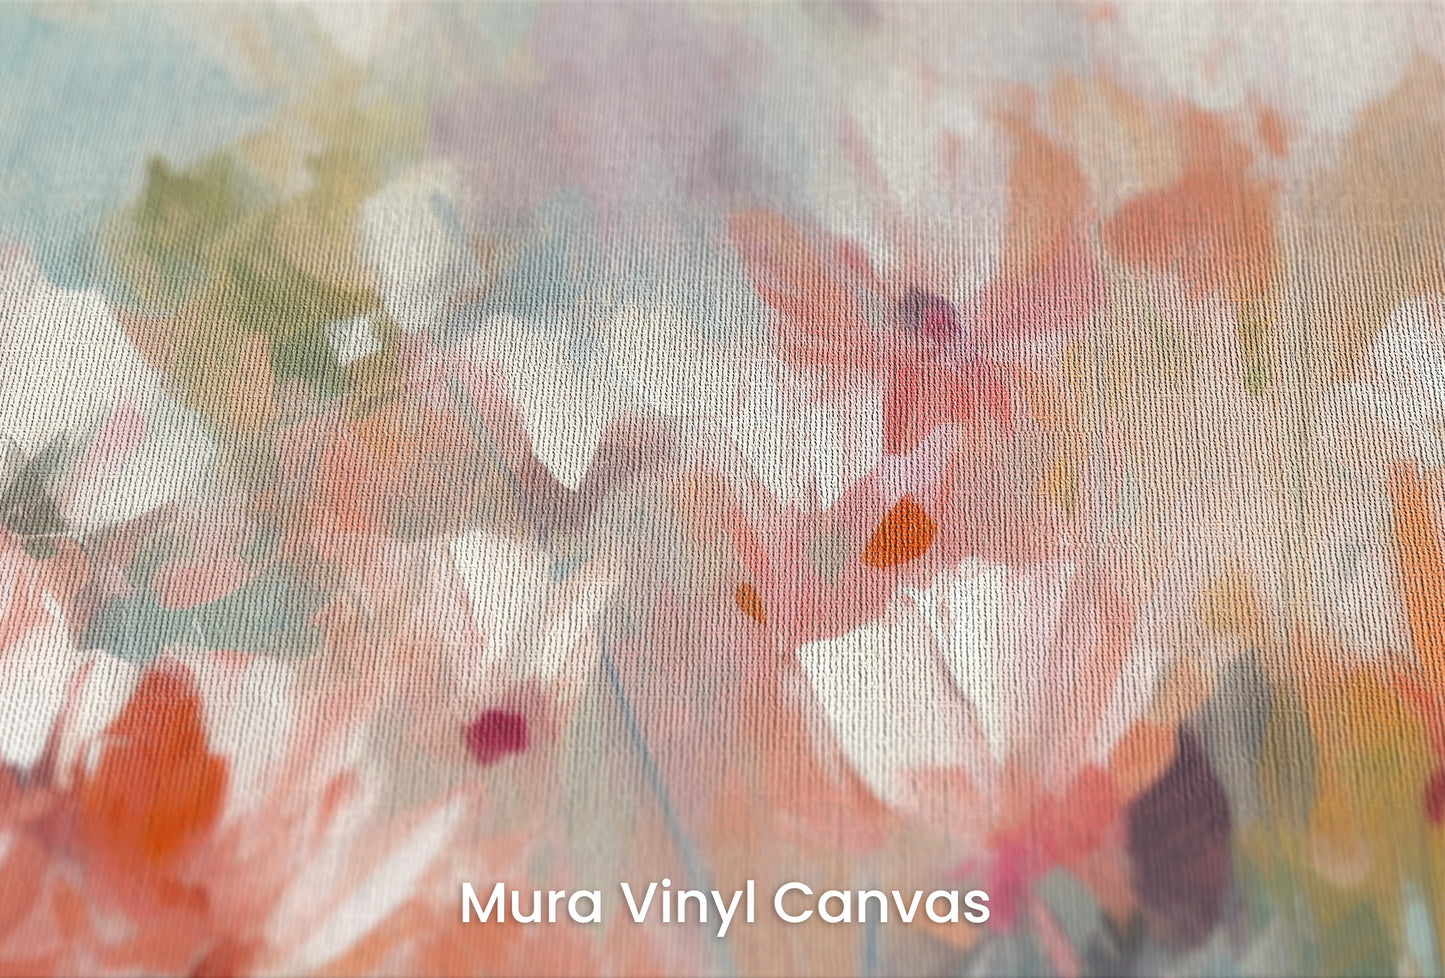 Zbliżenie na artystyczną fototapetę o nazwie Delicate Floral Hues na podłożu Mura Vinyl Canvas - faktura naturalnego płótna.